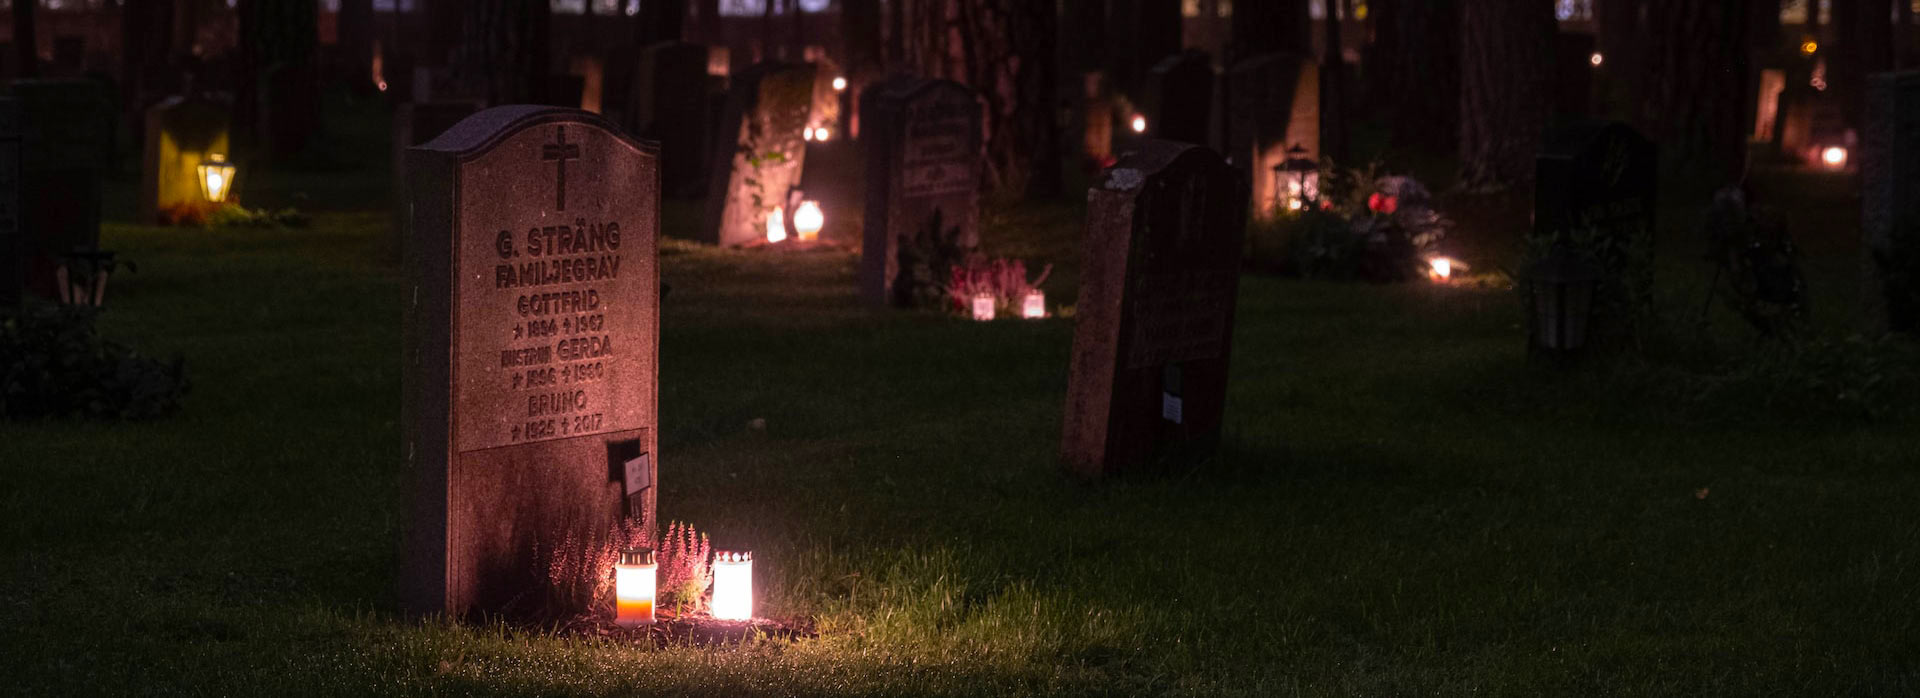 En kirkegård om natten oplyst med stearinlys